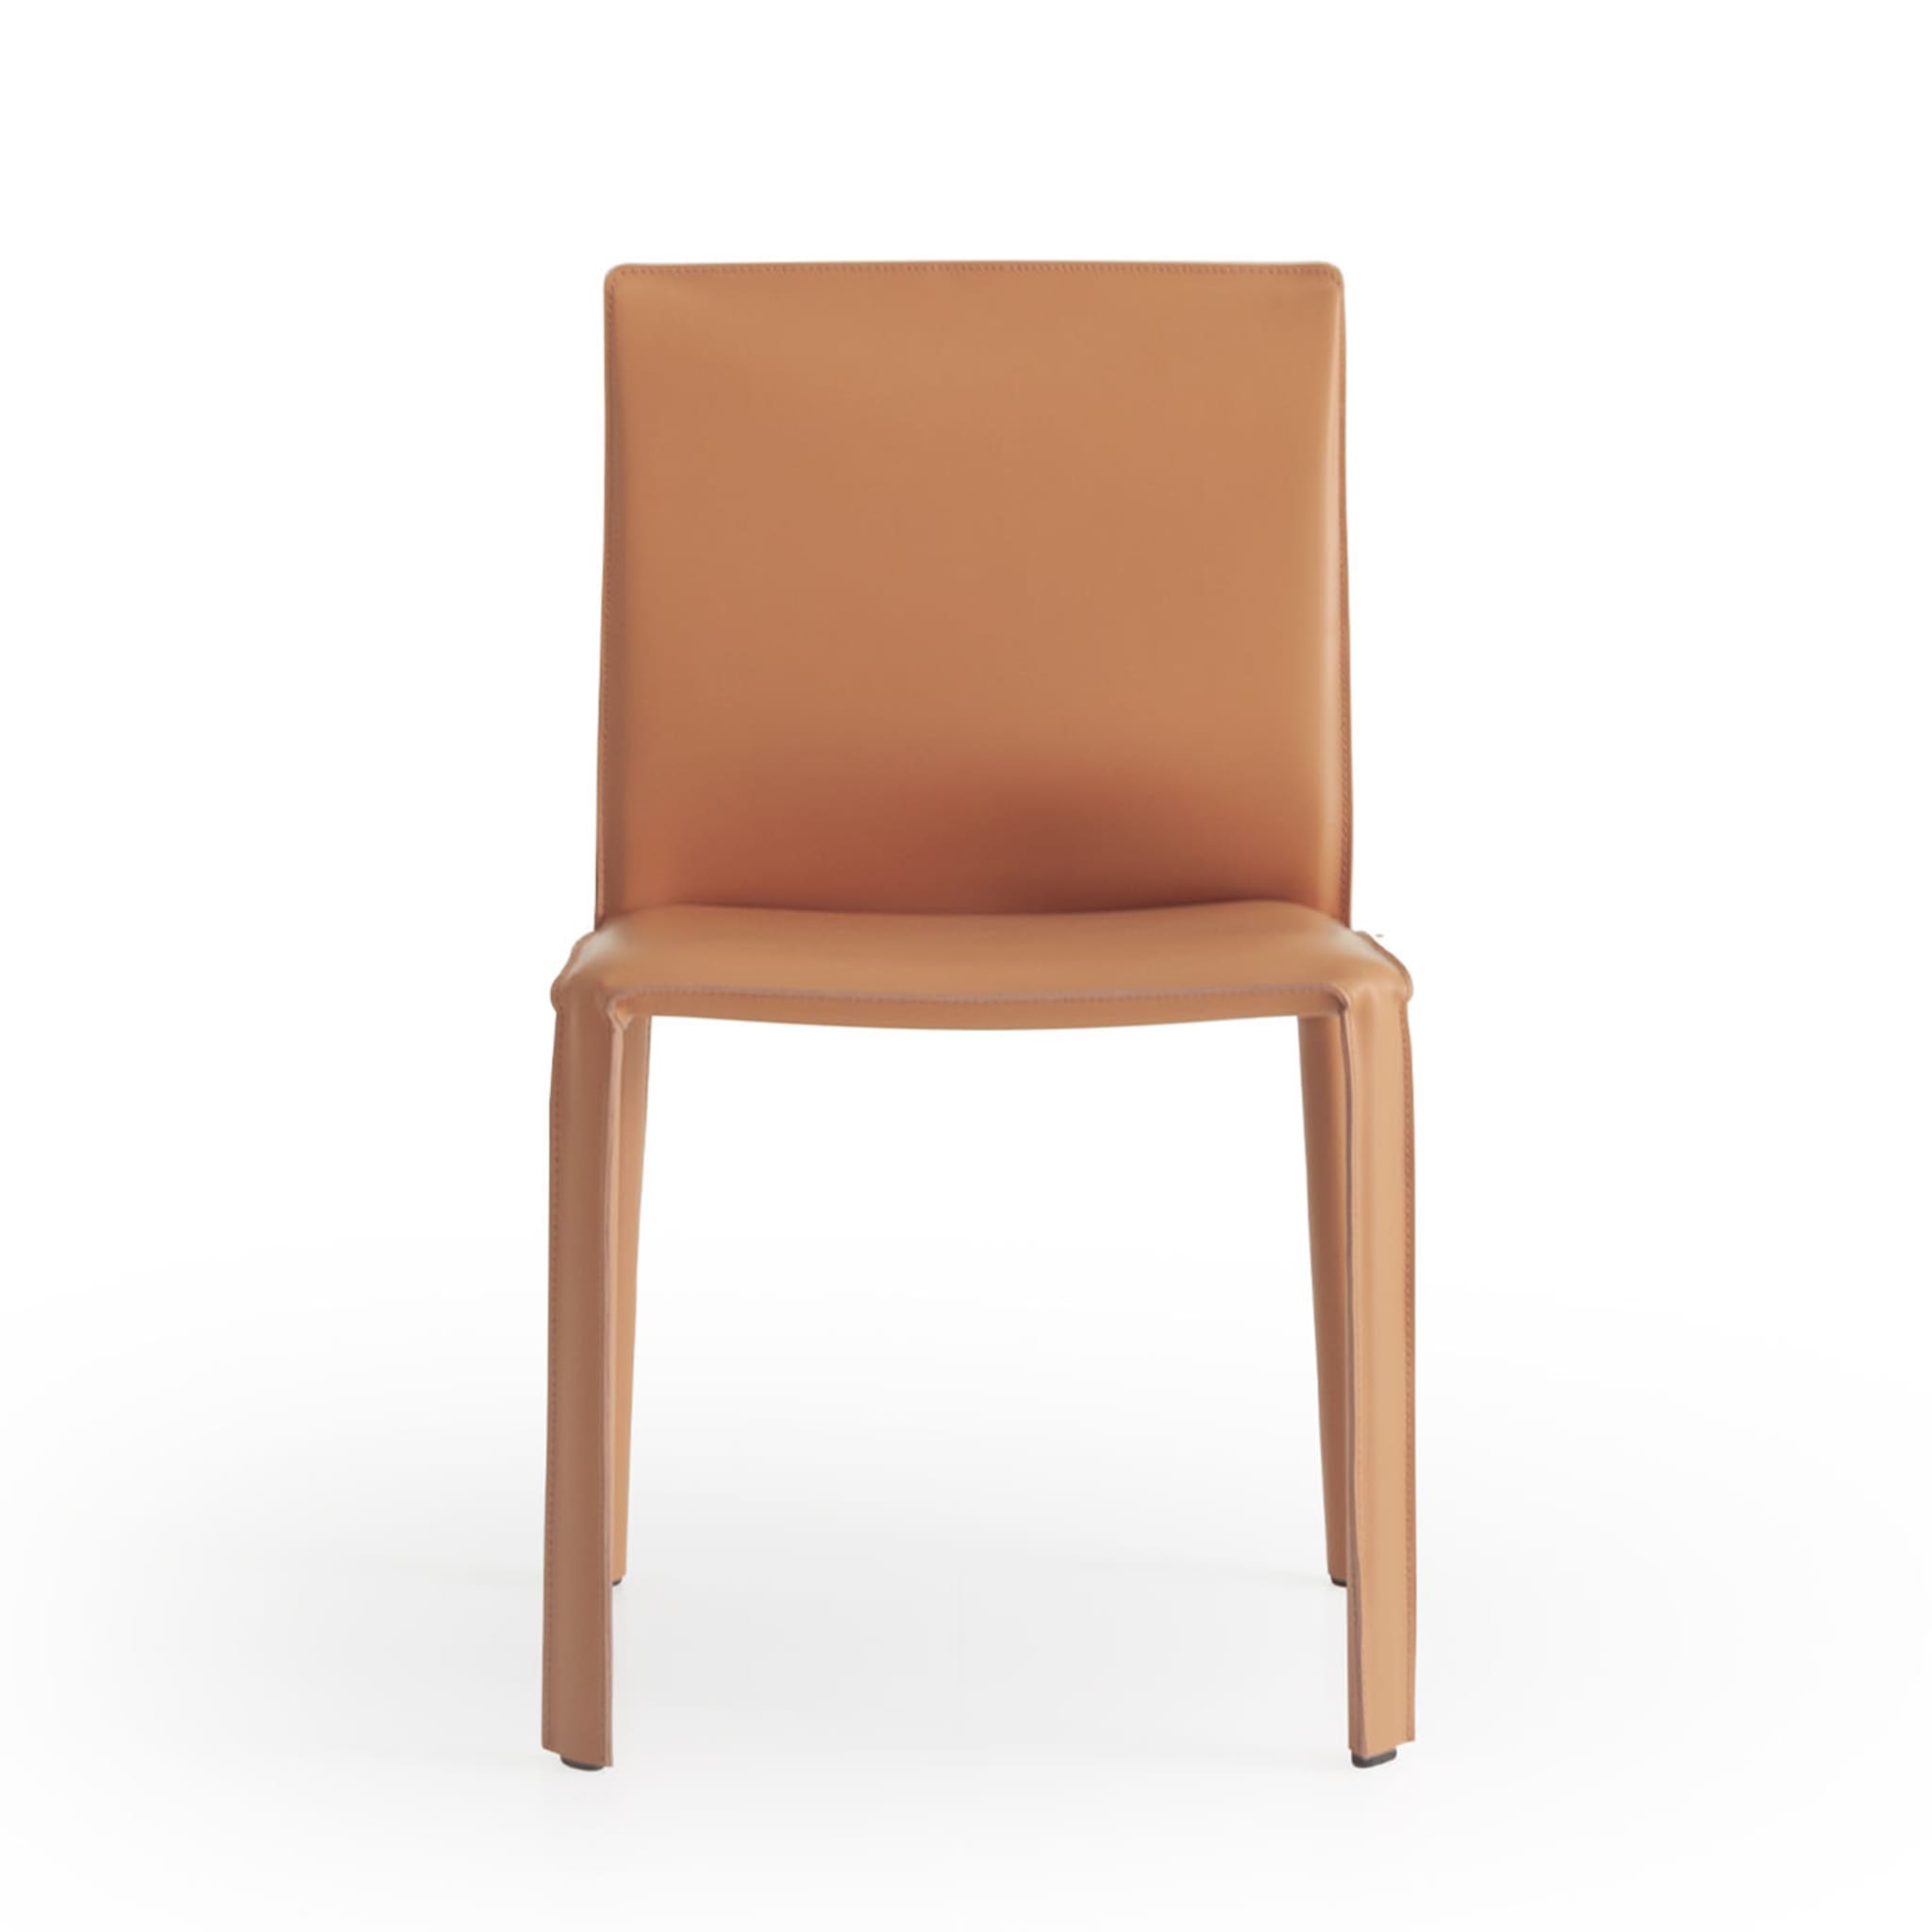 Jumpsuite Cognac-Toned Leather Chair - Alternative view 1